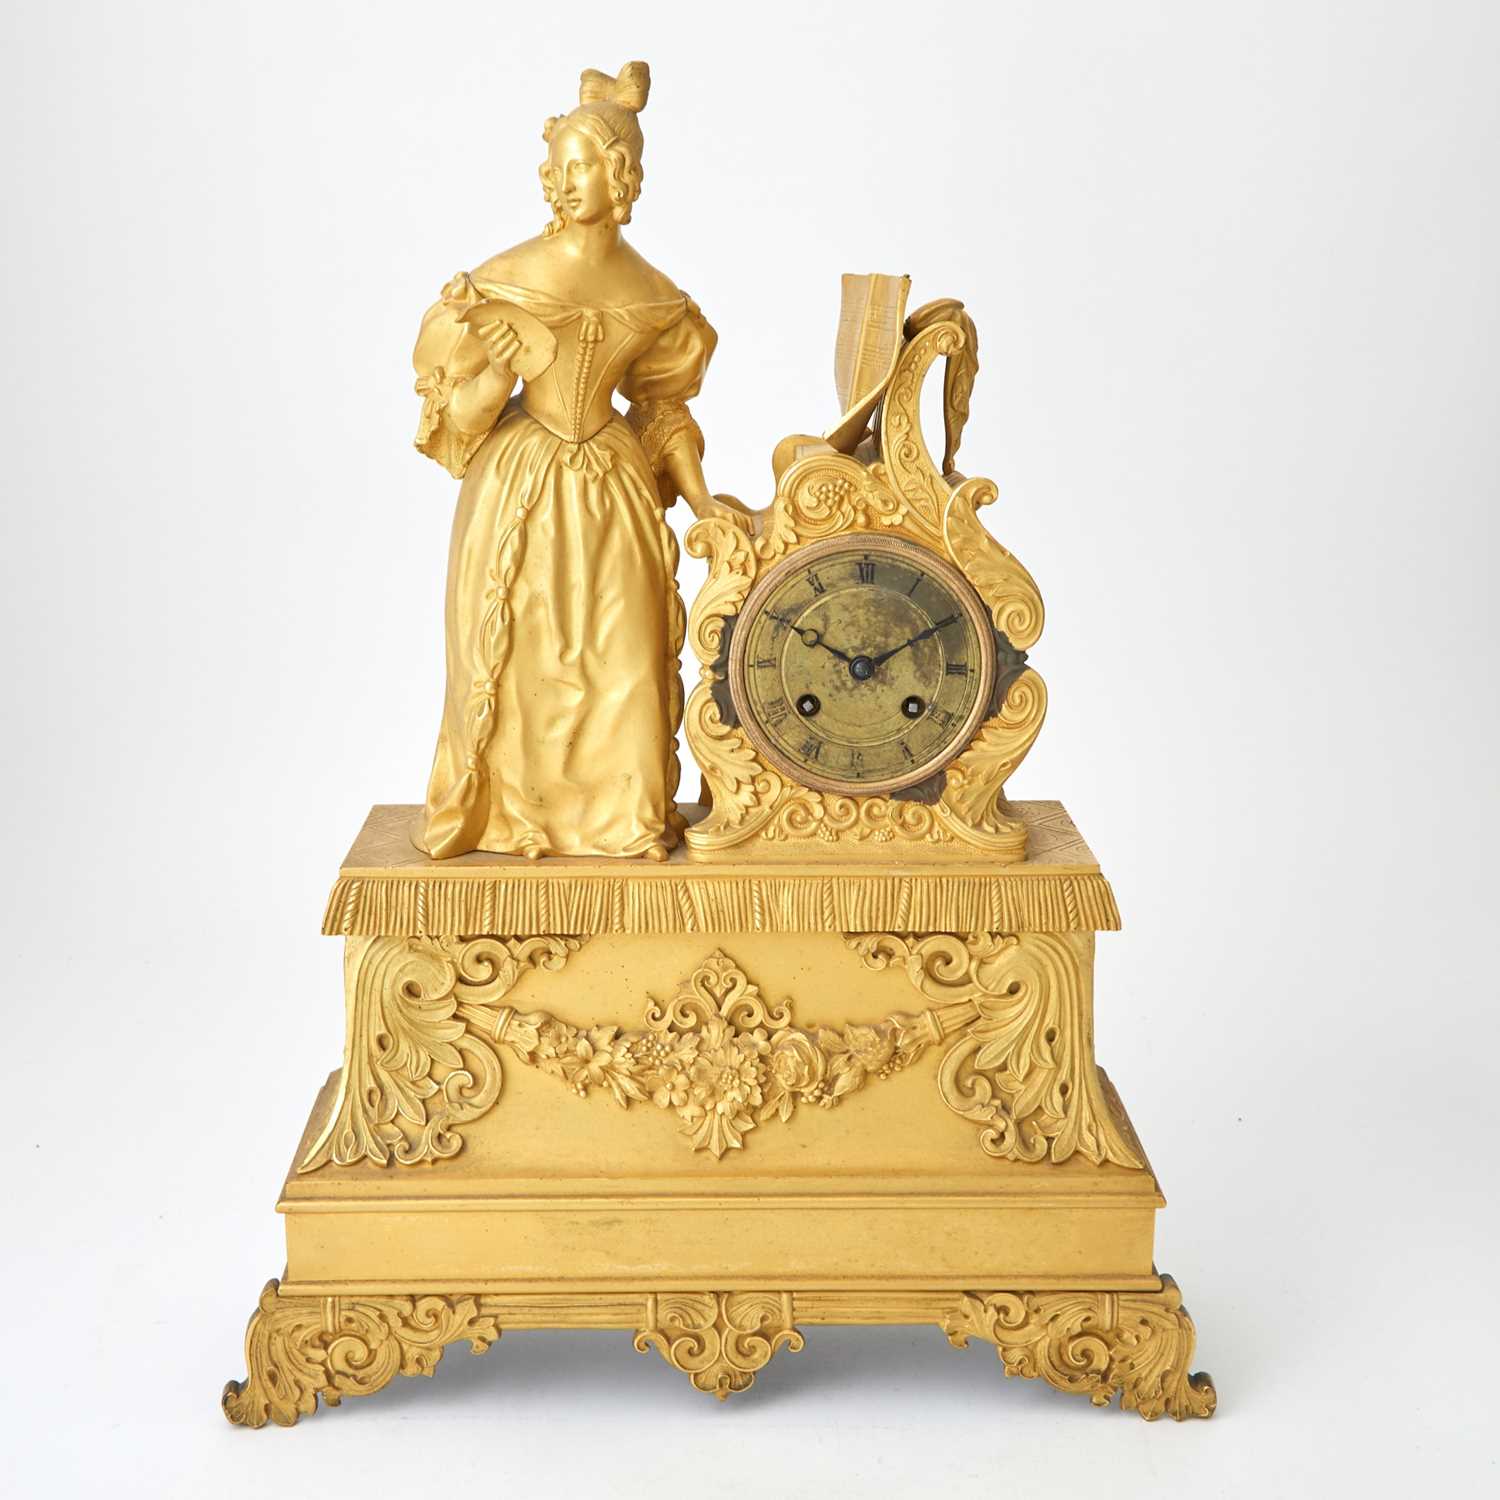 Lot 254 - Louis Philippe Gilt-Bronze Figural Mantel Clock